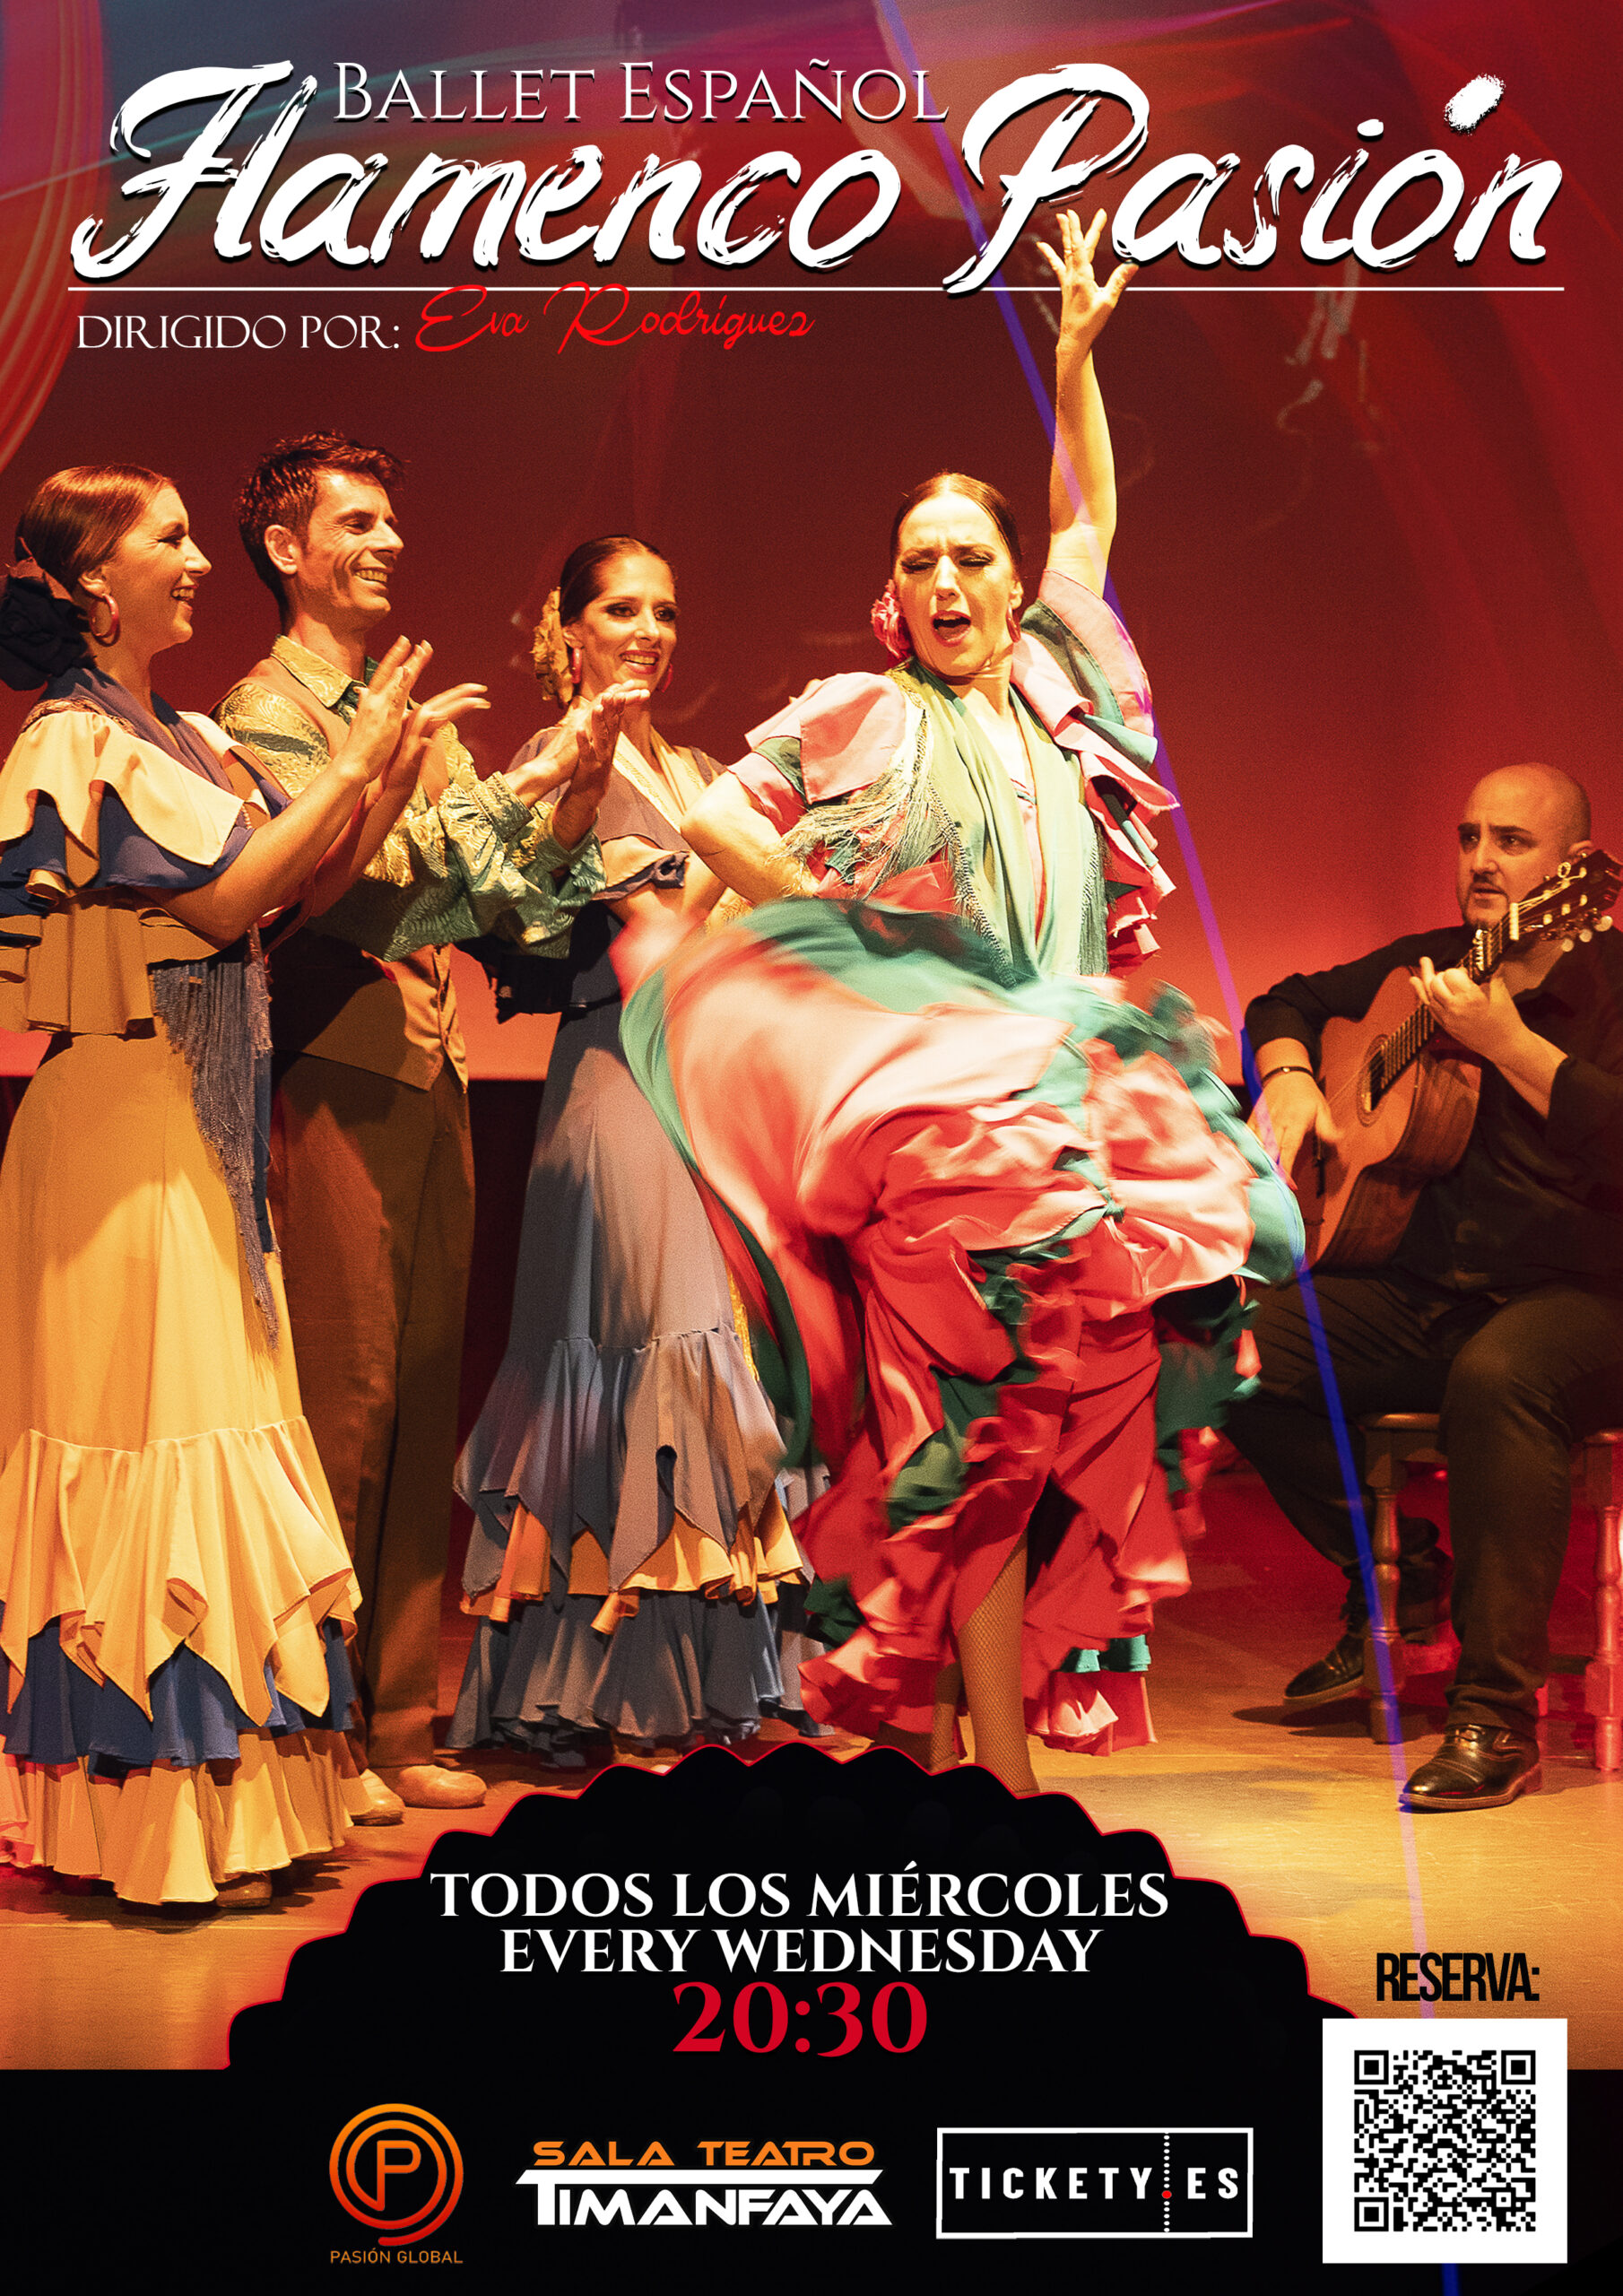 Flamenco Passion scaled